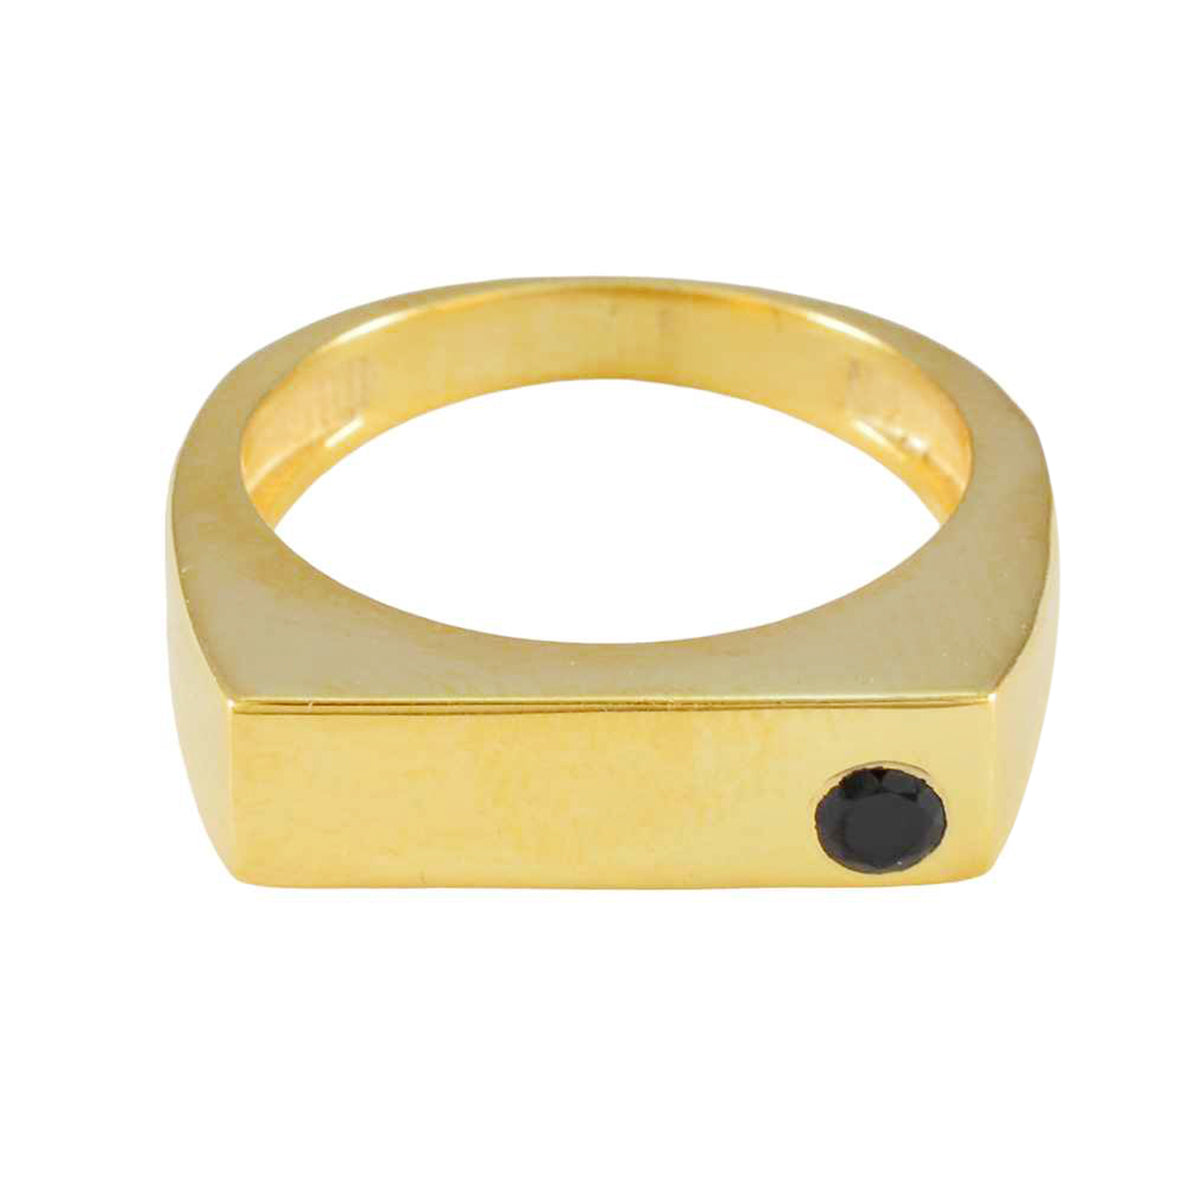 Riyo Perfect Silver Ring With Yellow Gold Plating Blue Sapphire Stone Round Shape Bezel Setting Stylish Jewelry Black Friday Ring